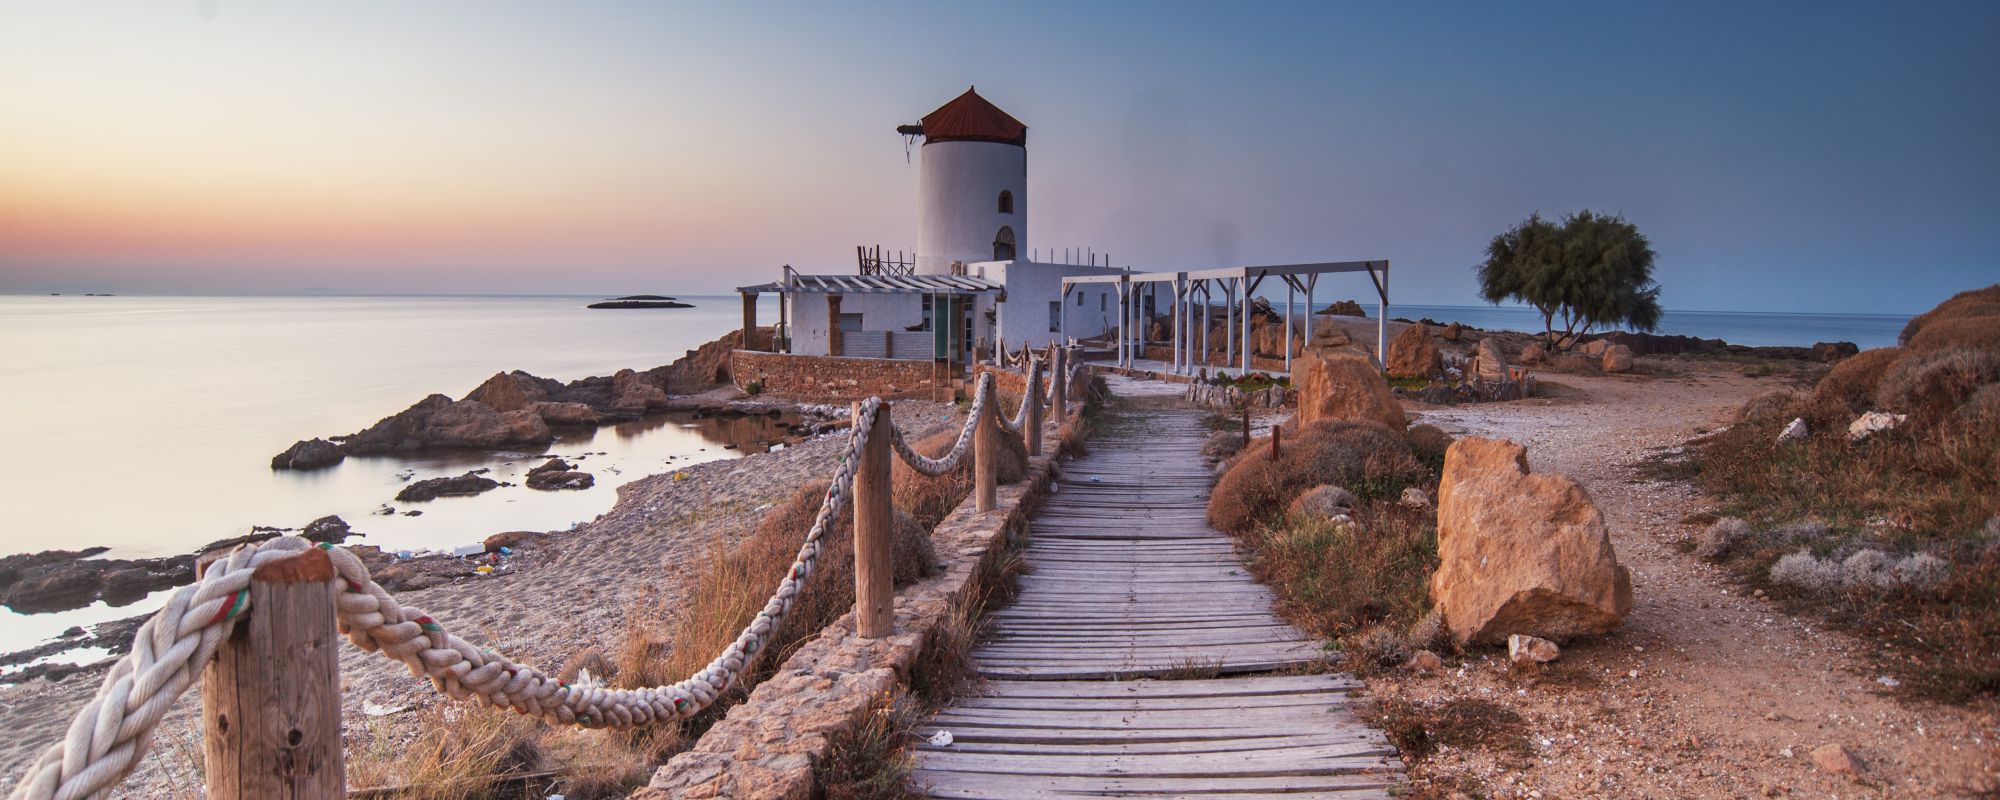 Skyros island - credits: Orestis Markopoulos/Shutterstock.com